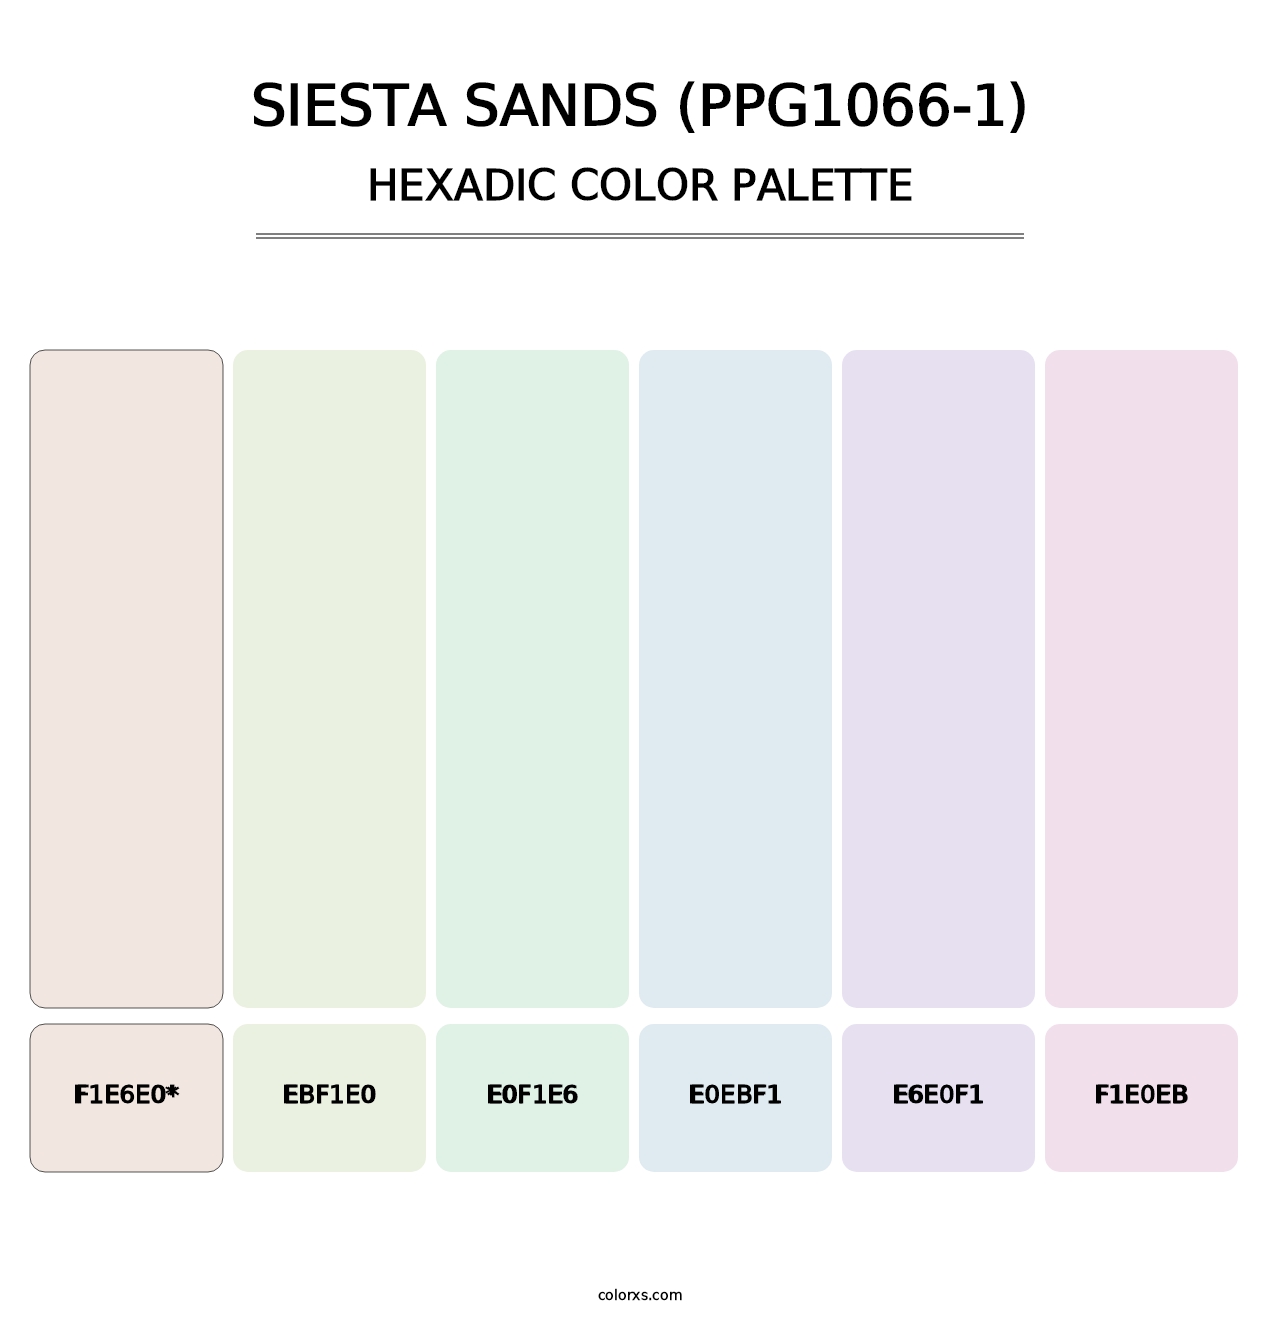 Siesta Sands (PPG1066-1) - Hexadic Color Palette